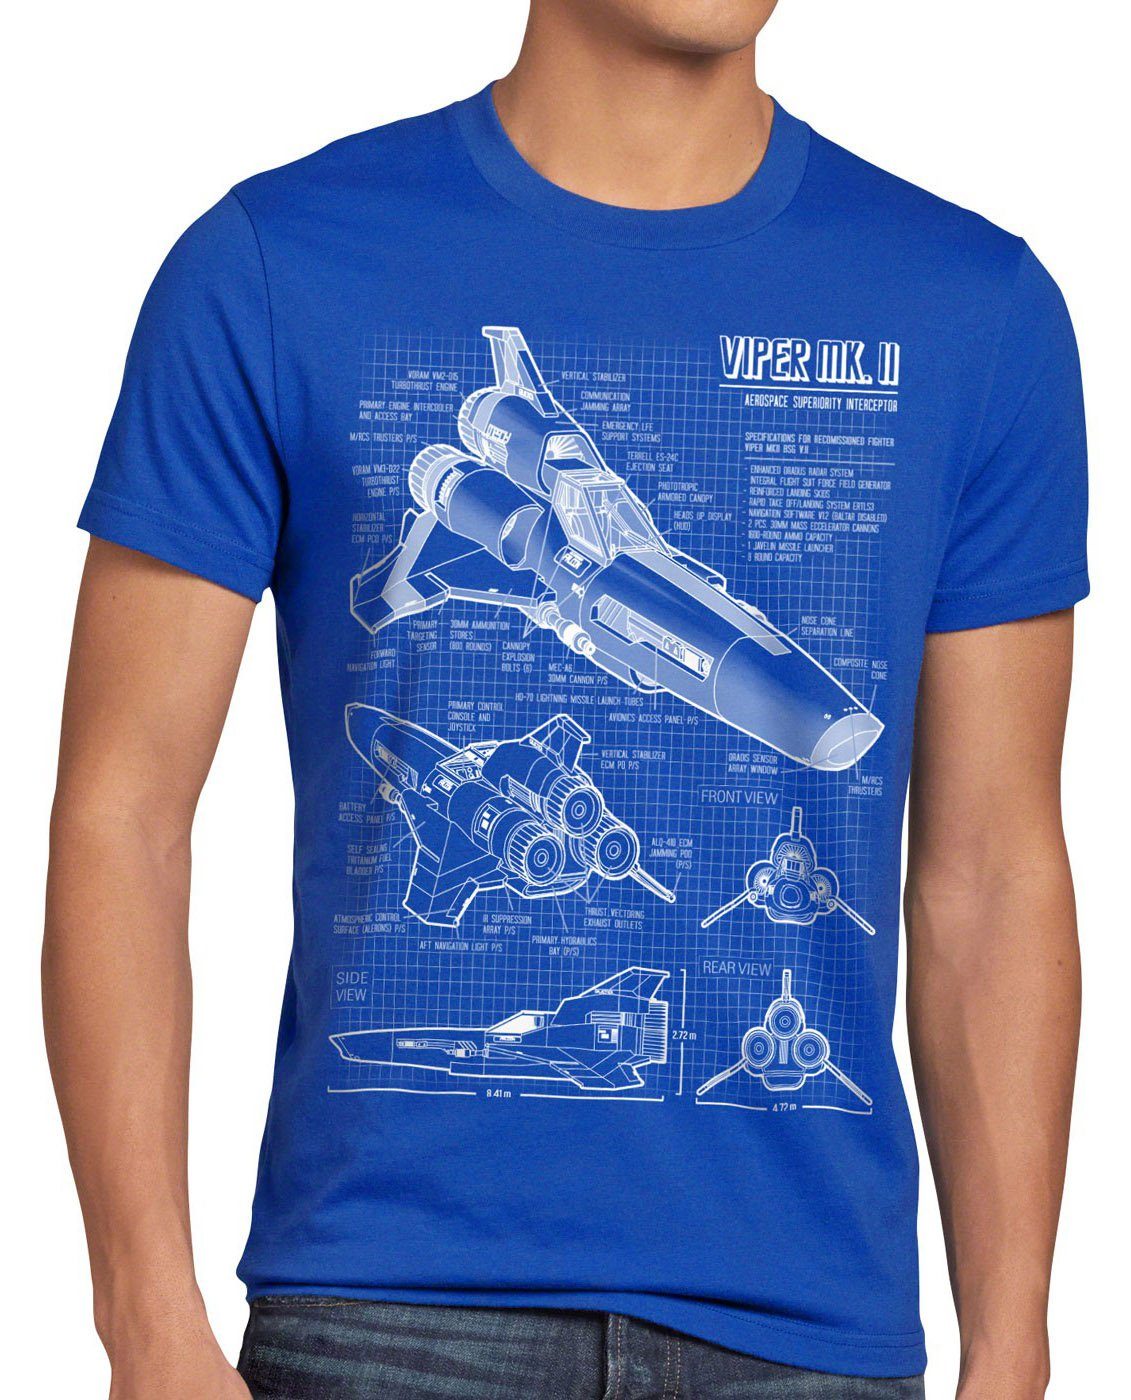 Viper MK2 kampfstern Herren blau style3 battlestar galaktika Print-Shirt galactica jäger T-Shirt zylon